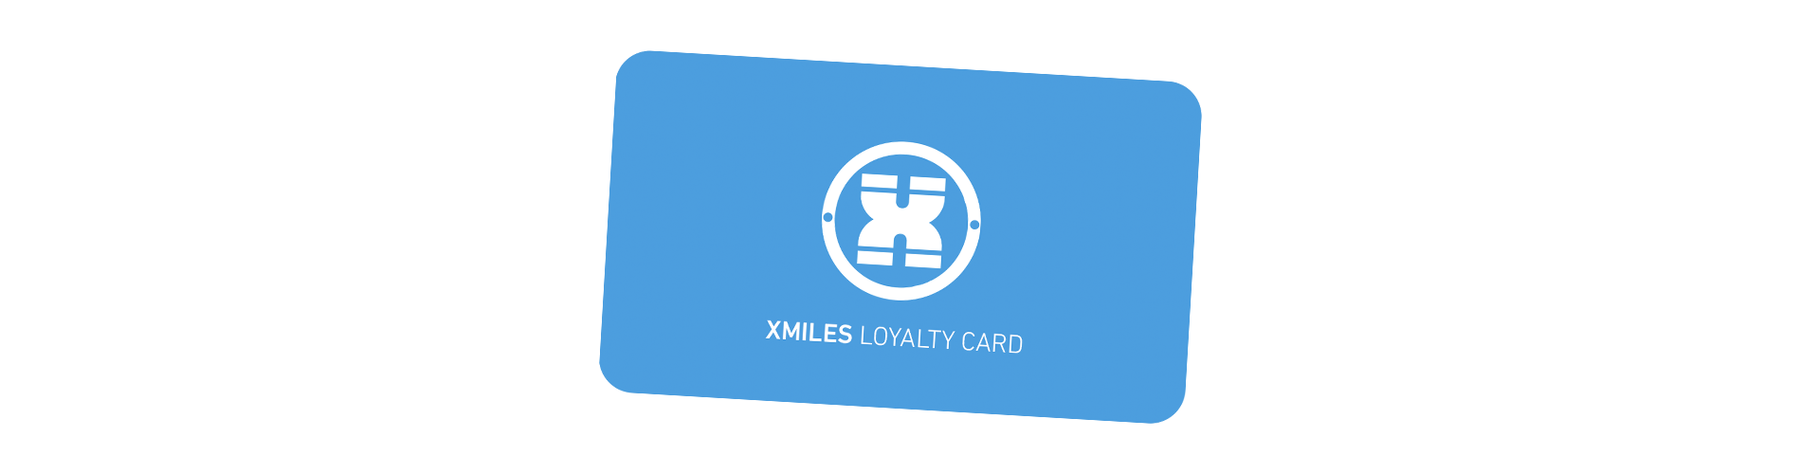 Introducing XMiles Loyalty Card